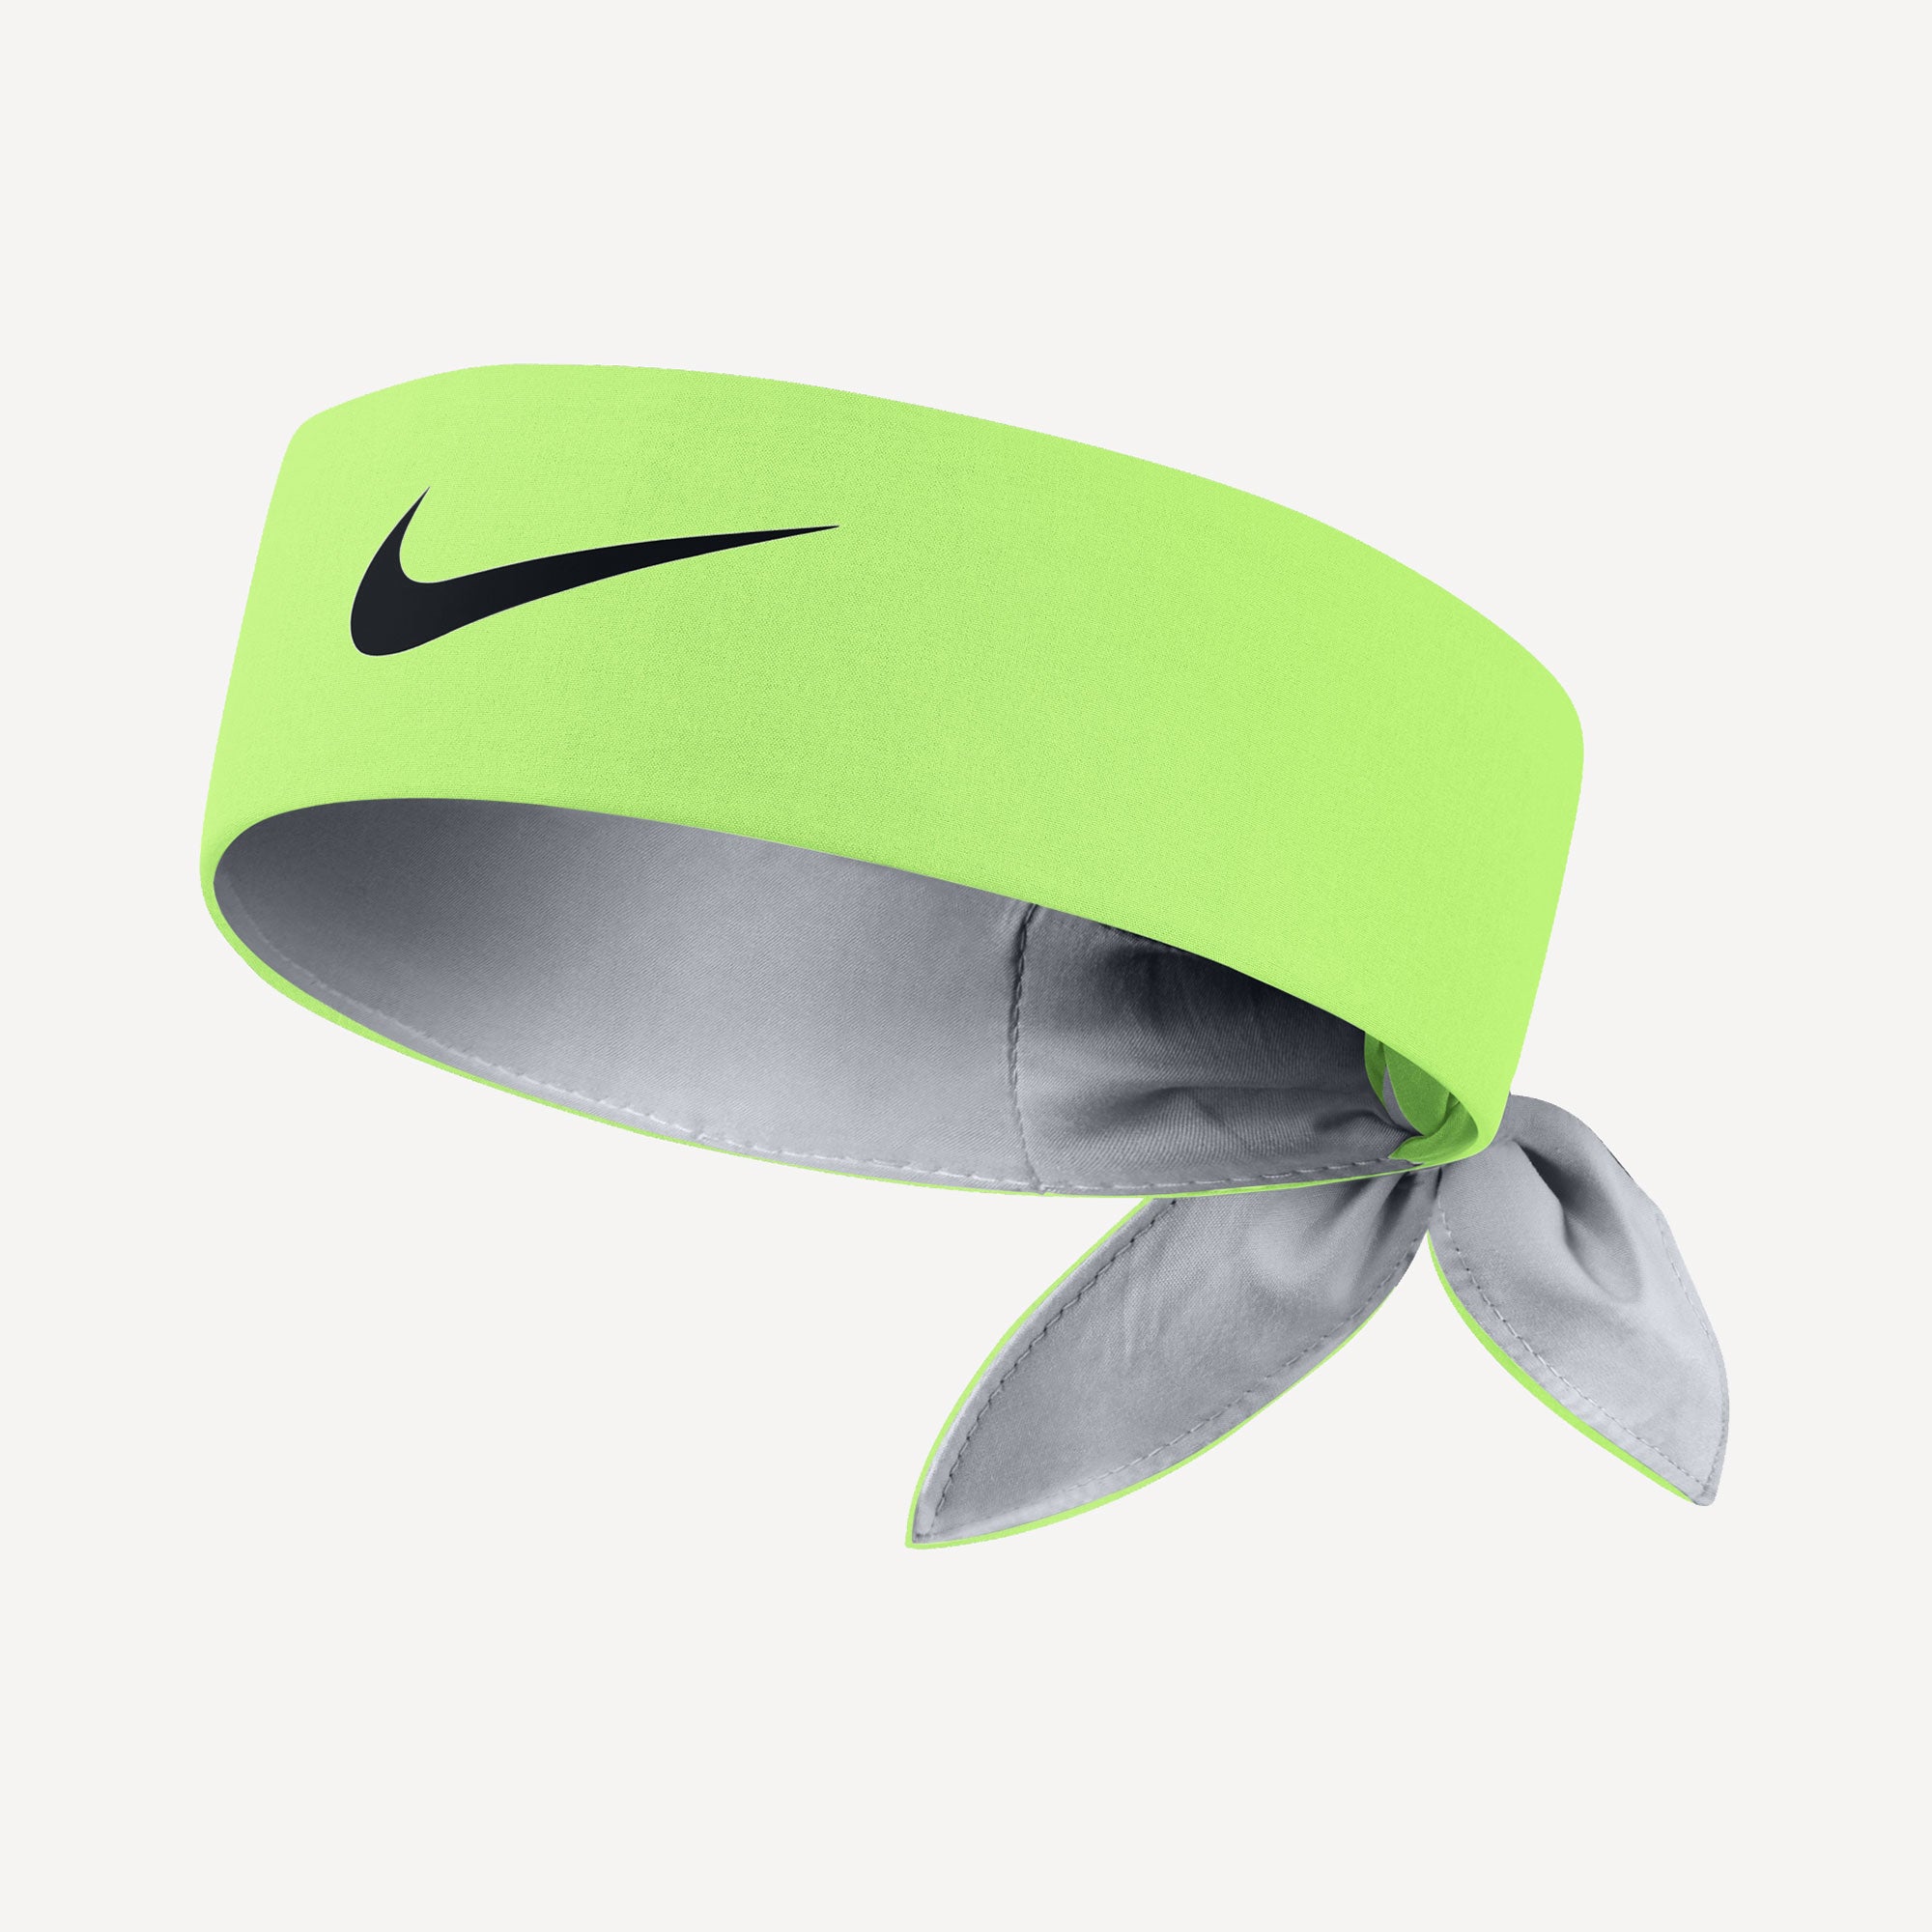 Nike Tennis Headband Green (1)